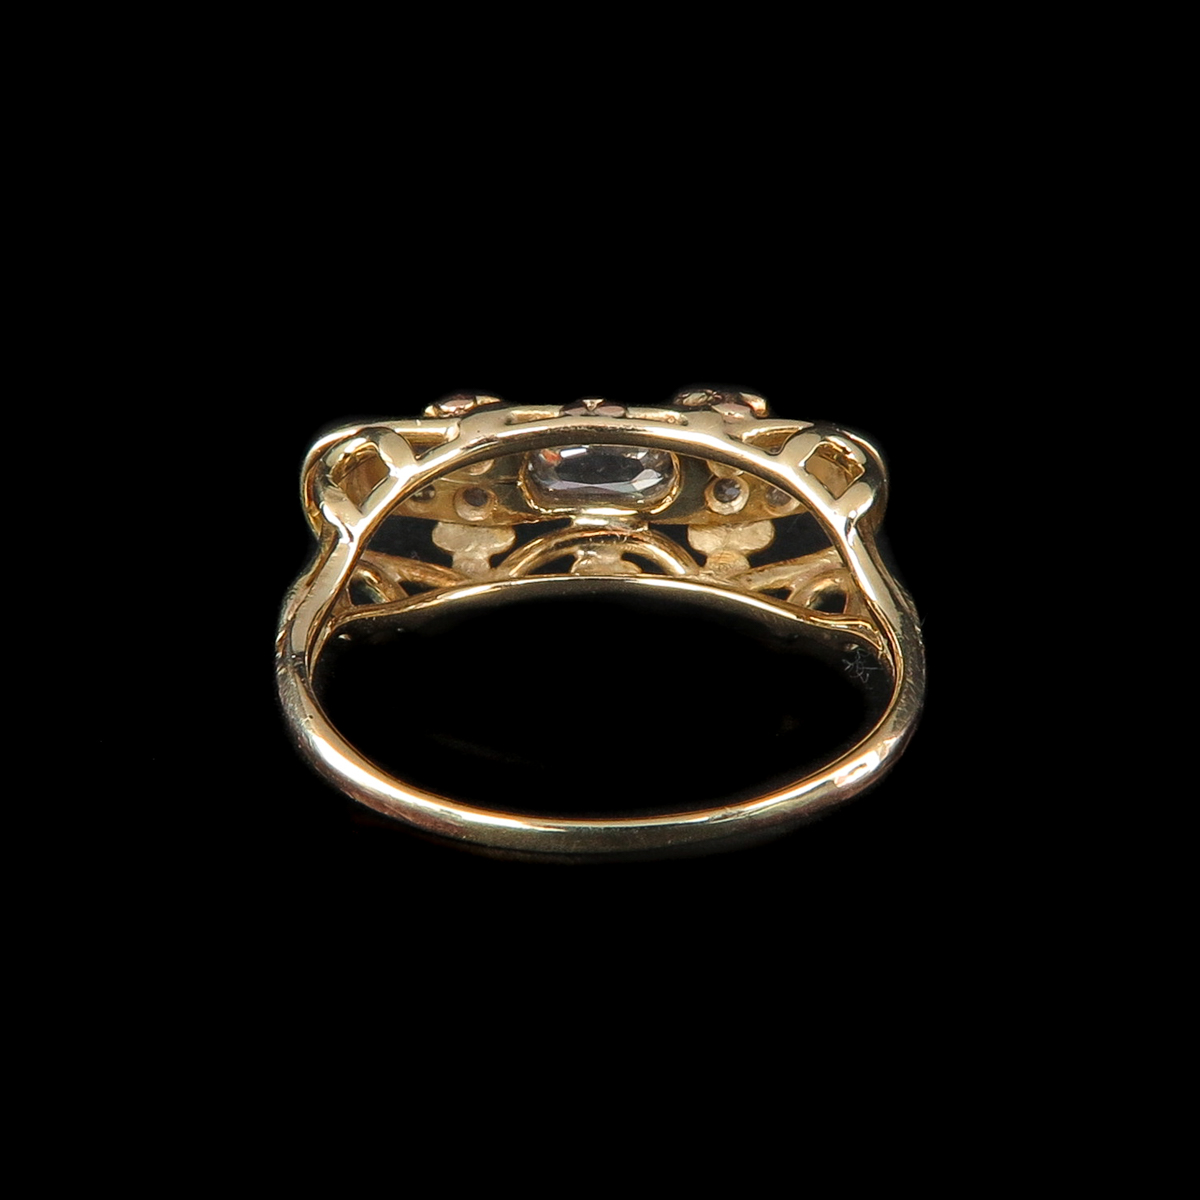 A Ladies Art Deco Diamond Ring - Image 3 of 3